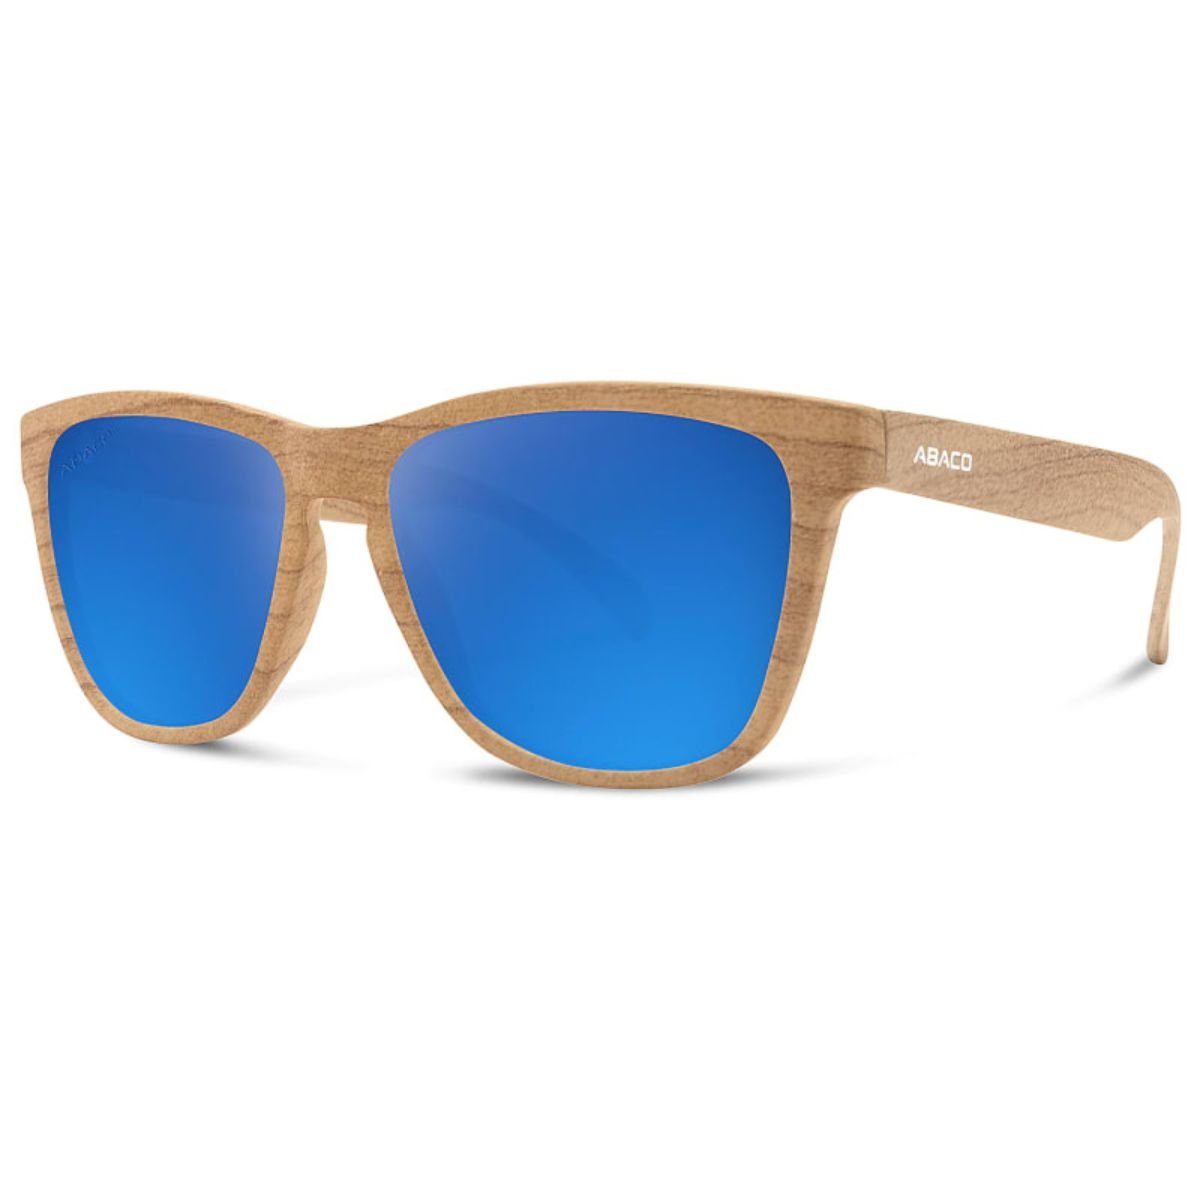 Abaco Dockside Sunglasses in Grey Wood/Deep Blue - BoardCo